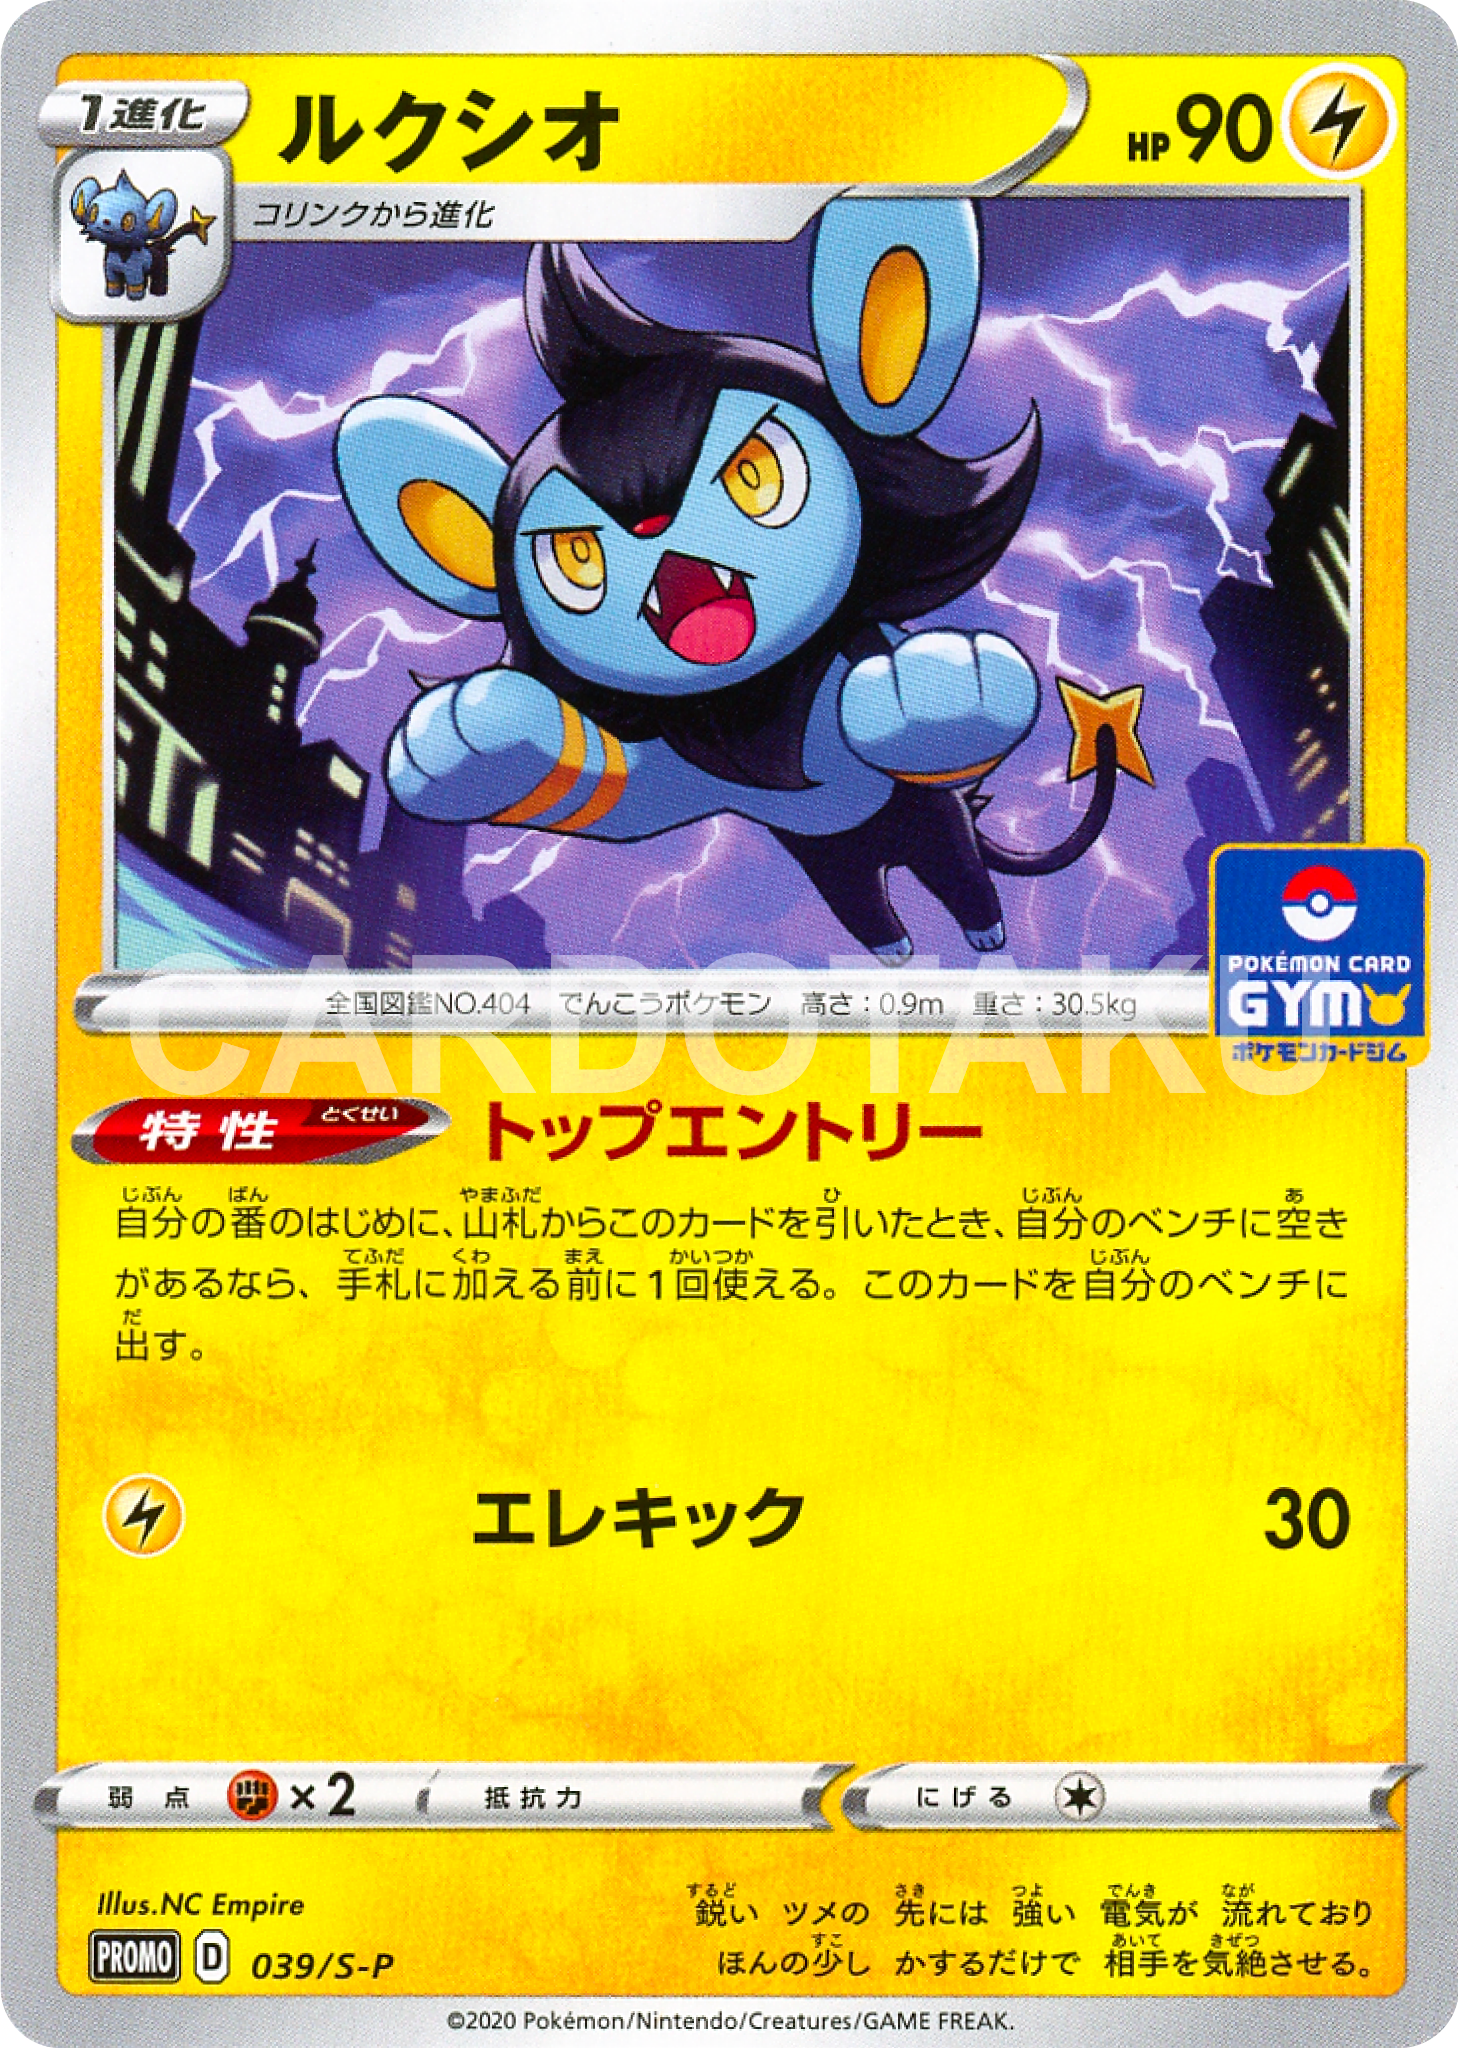 Pokémon Card Game Sword & Shield PROMO 039/S-P POKÉMON CARD GYM promo card pack #2 March 6 2020 Luxio